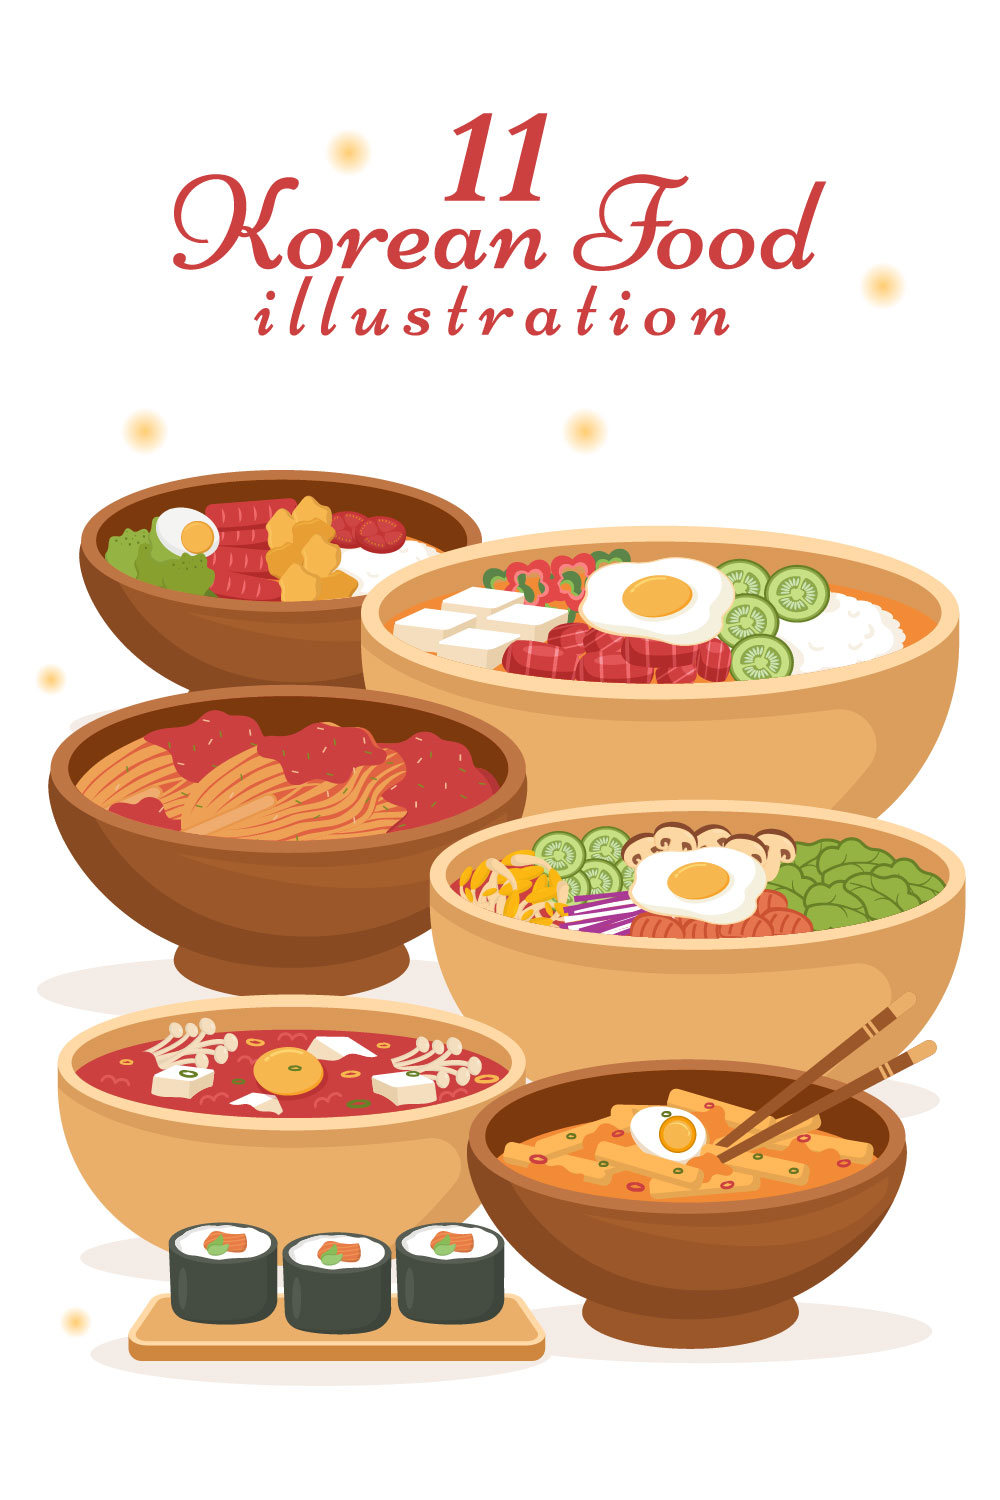 Korean Food Set Menu Illustration pinterest image.